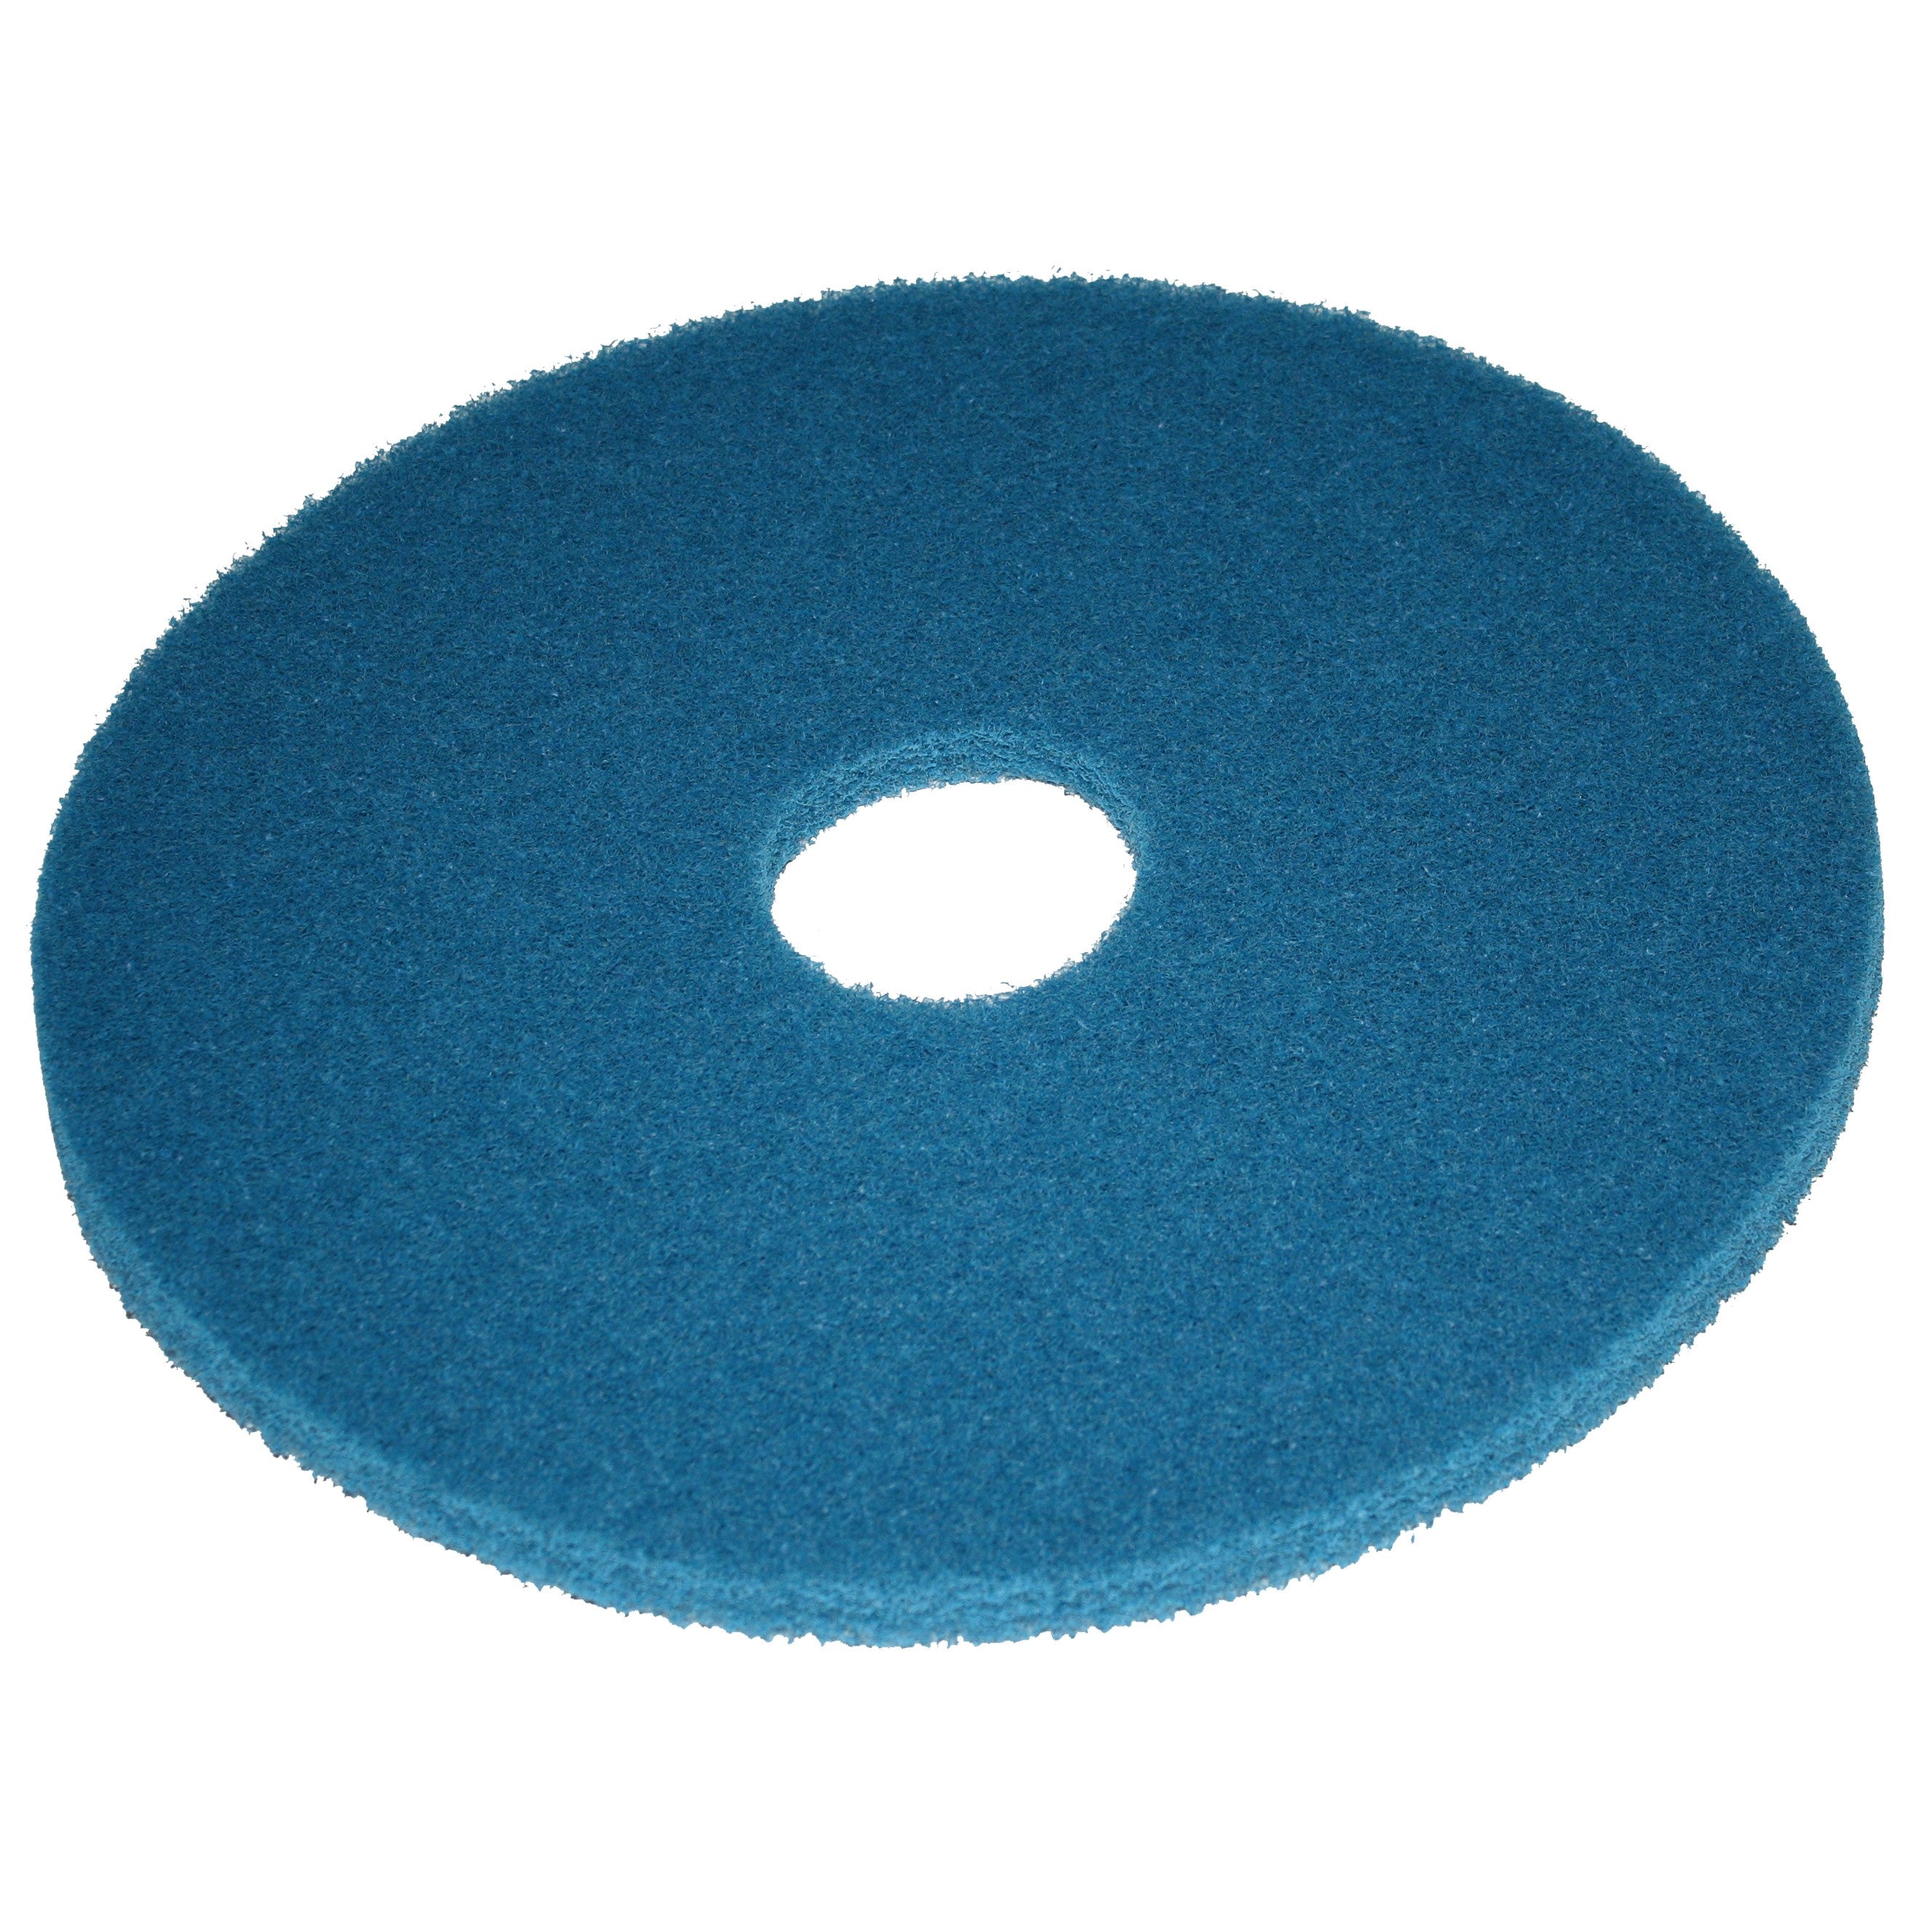 Pad blau, Ø 254 mm, Polyester